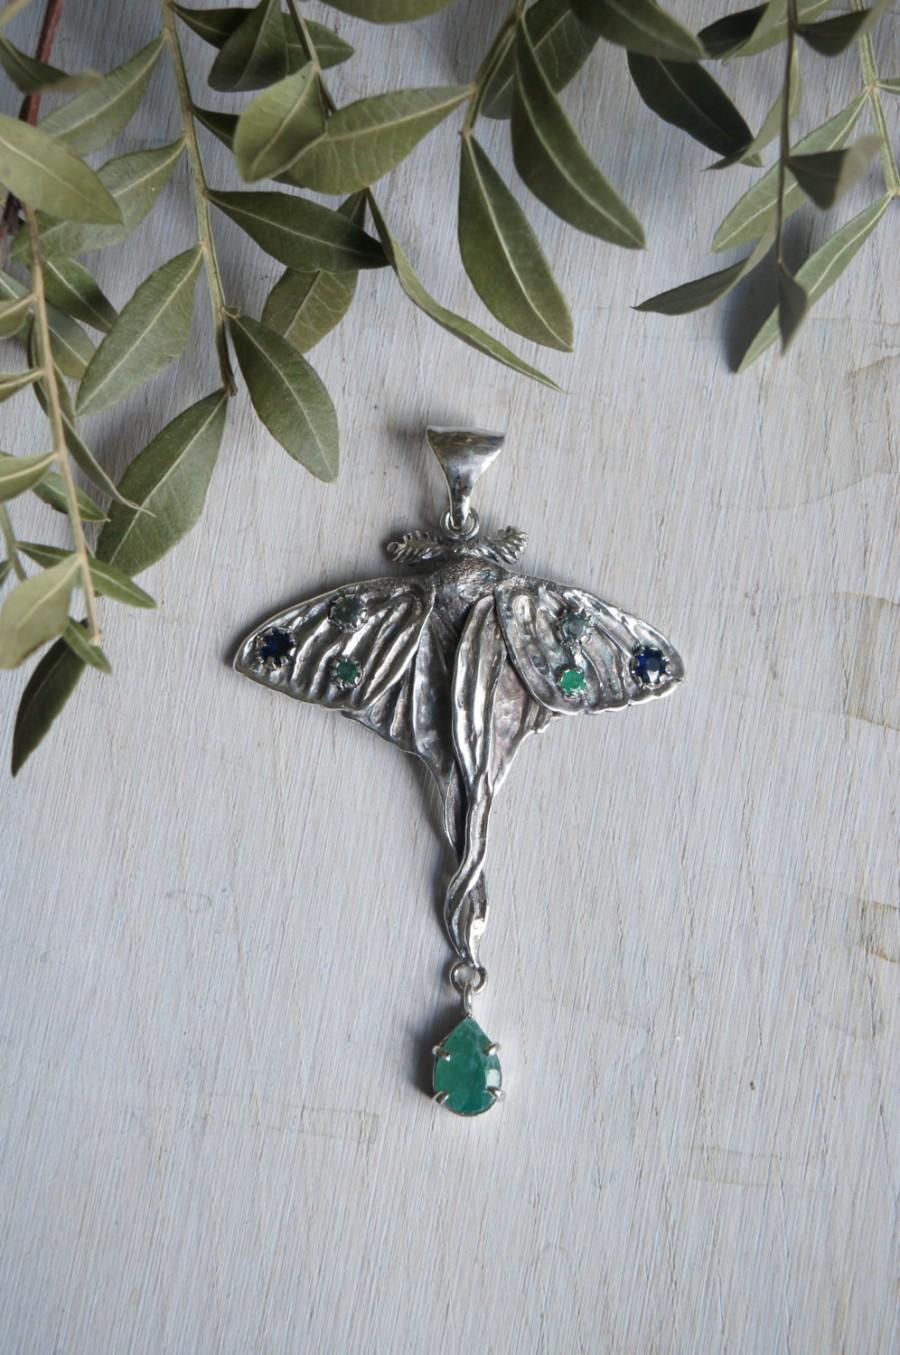 Wedding - Art nouveau pendant with emeralds and sapphires, moth pendant, art nouveau jewelry, butterfly pendant, sterling silver pendant, artisan